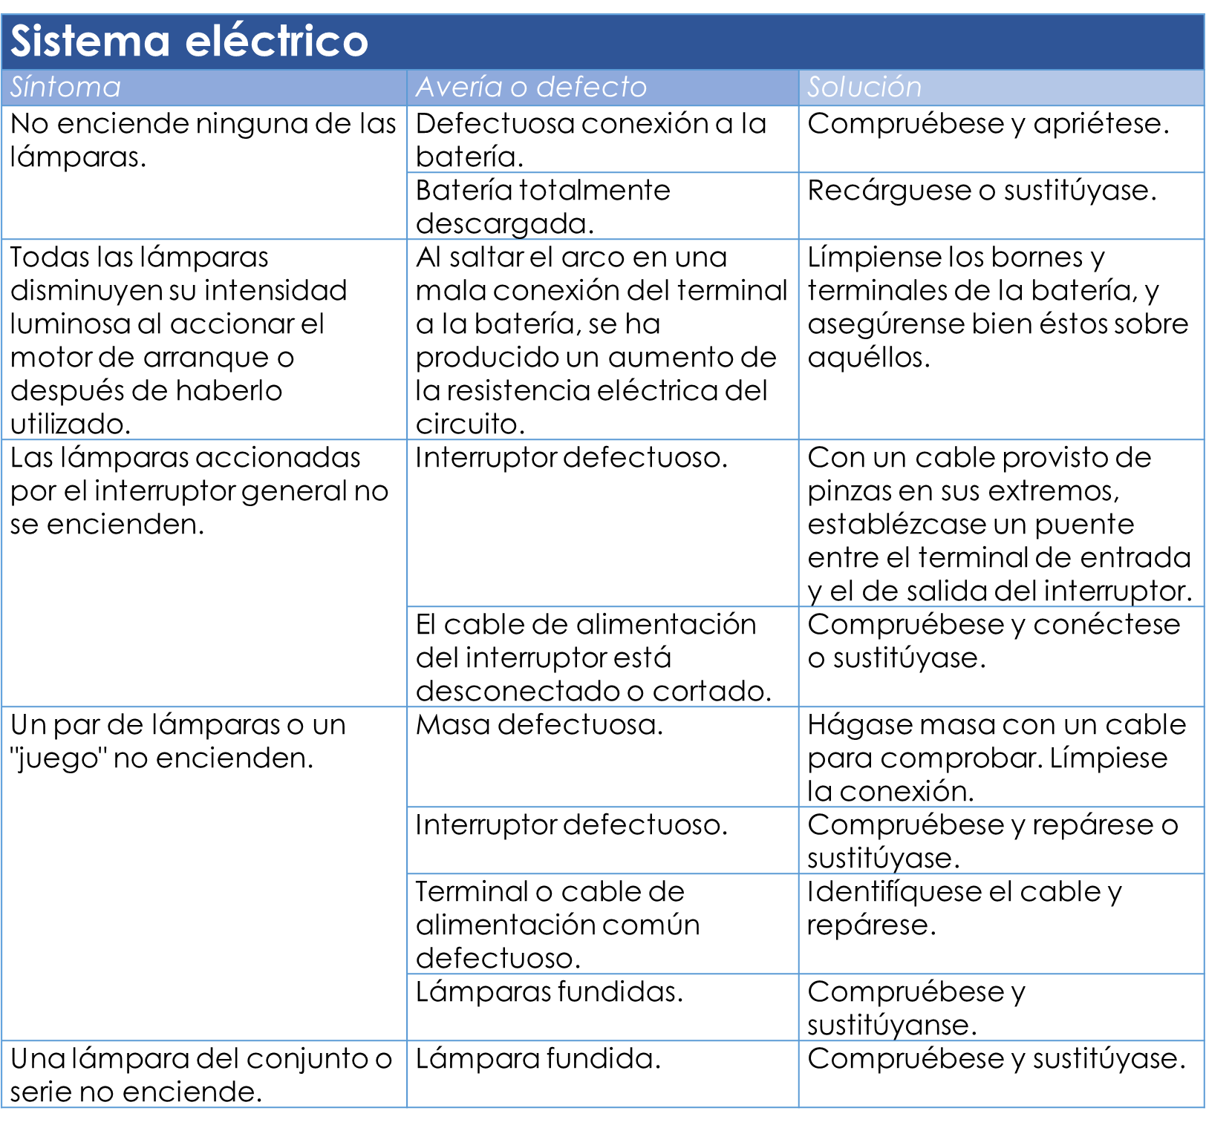 Tabla 5: Sistema eléctrico